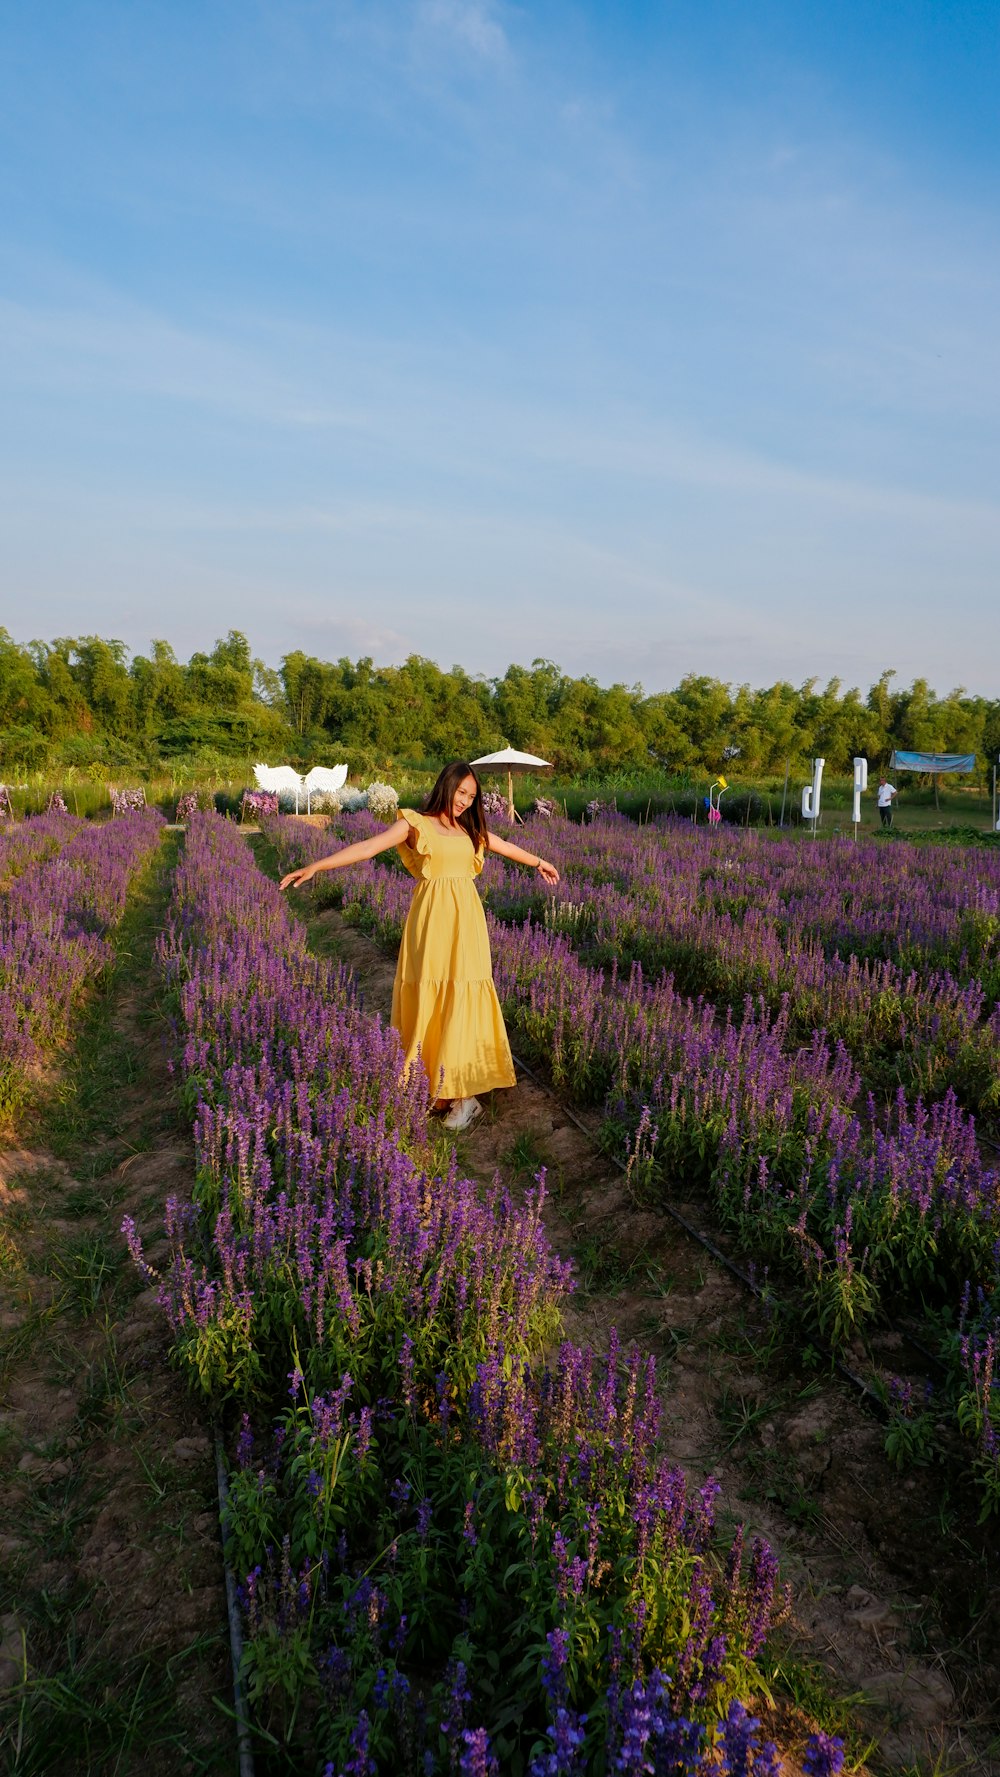 a woman in a yellow dress standing in a field of purple flowers